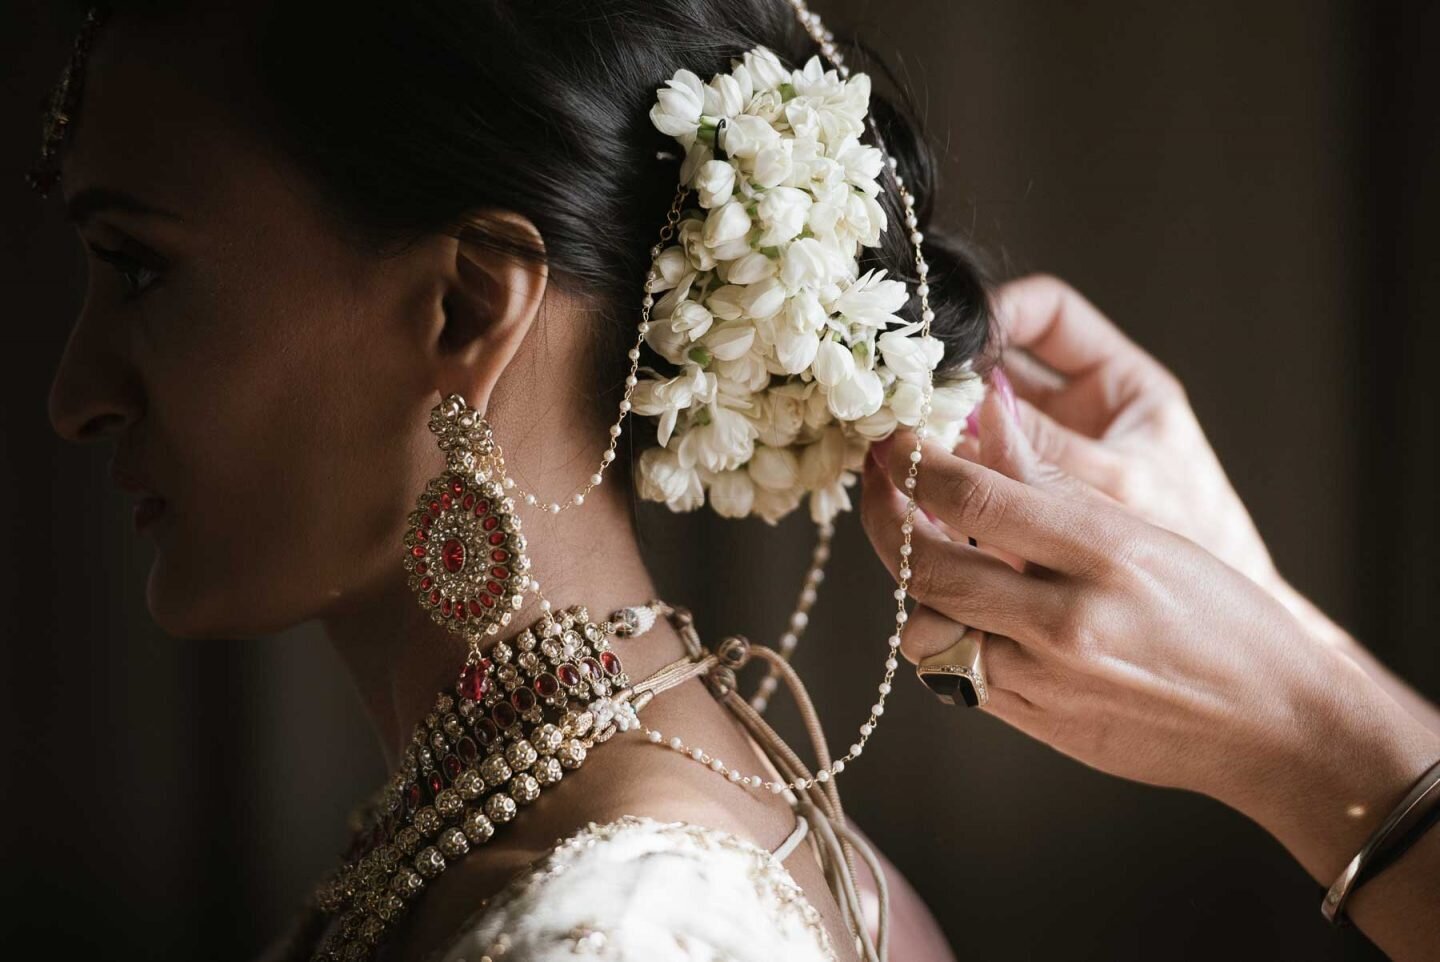 hyatt-regency-jersey-city-indian-wedding-08-1440x962